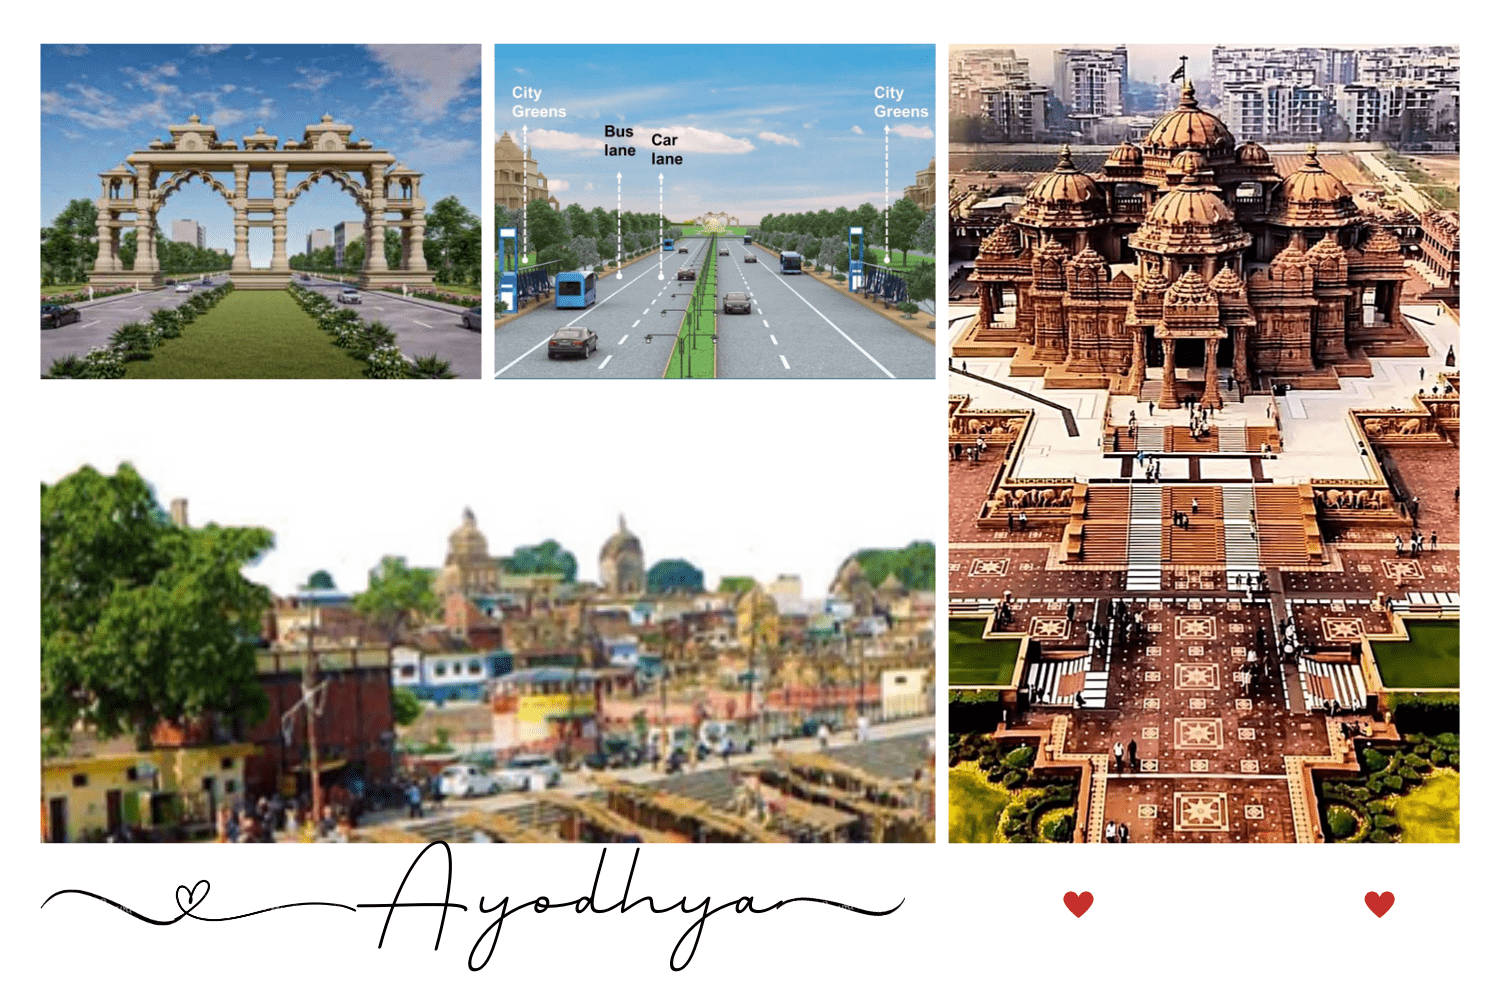 Guptar Ghat Ayodhya